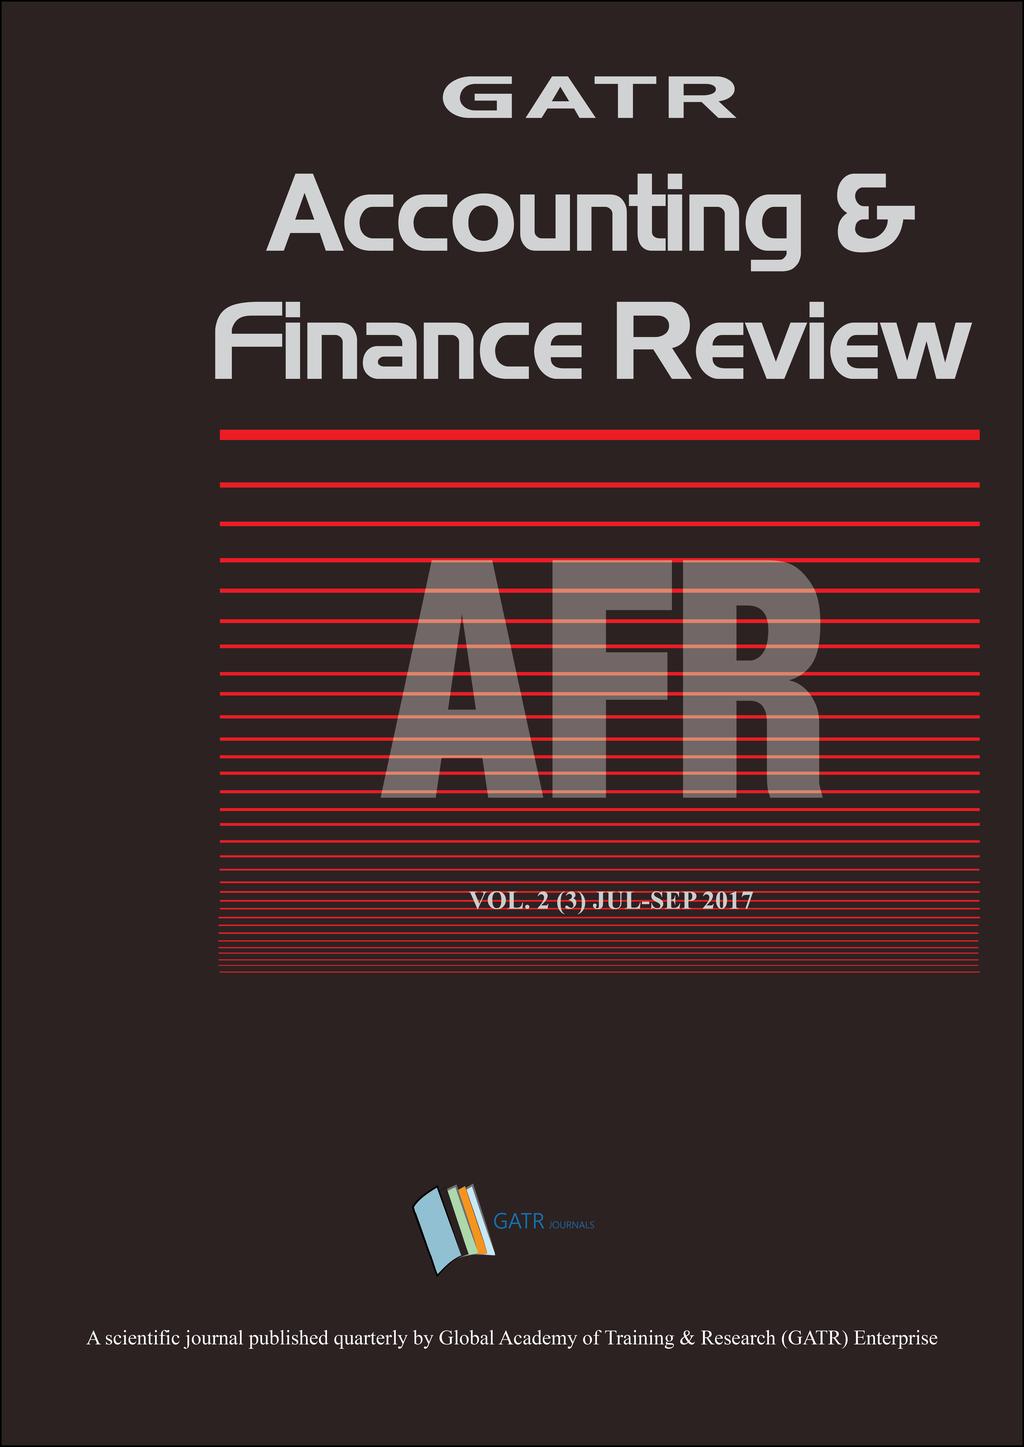 Accoun ng and Finance Review GATR JOURNALS Journal homepage: www.gatrenterprise.com/gatrjournals/index.